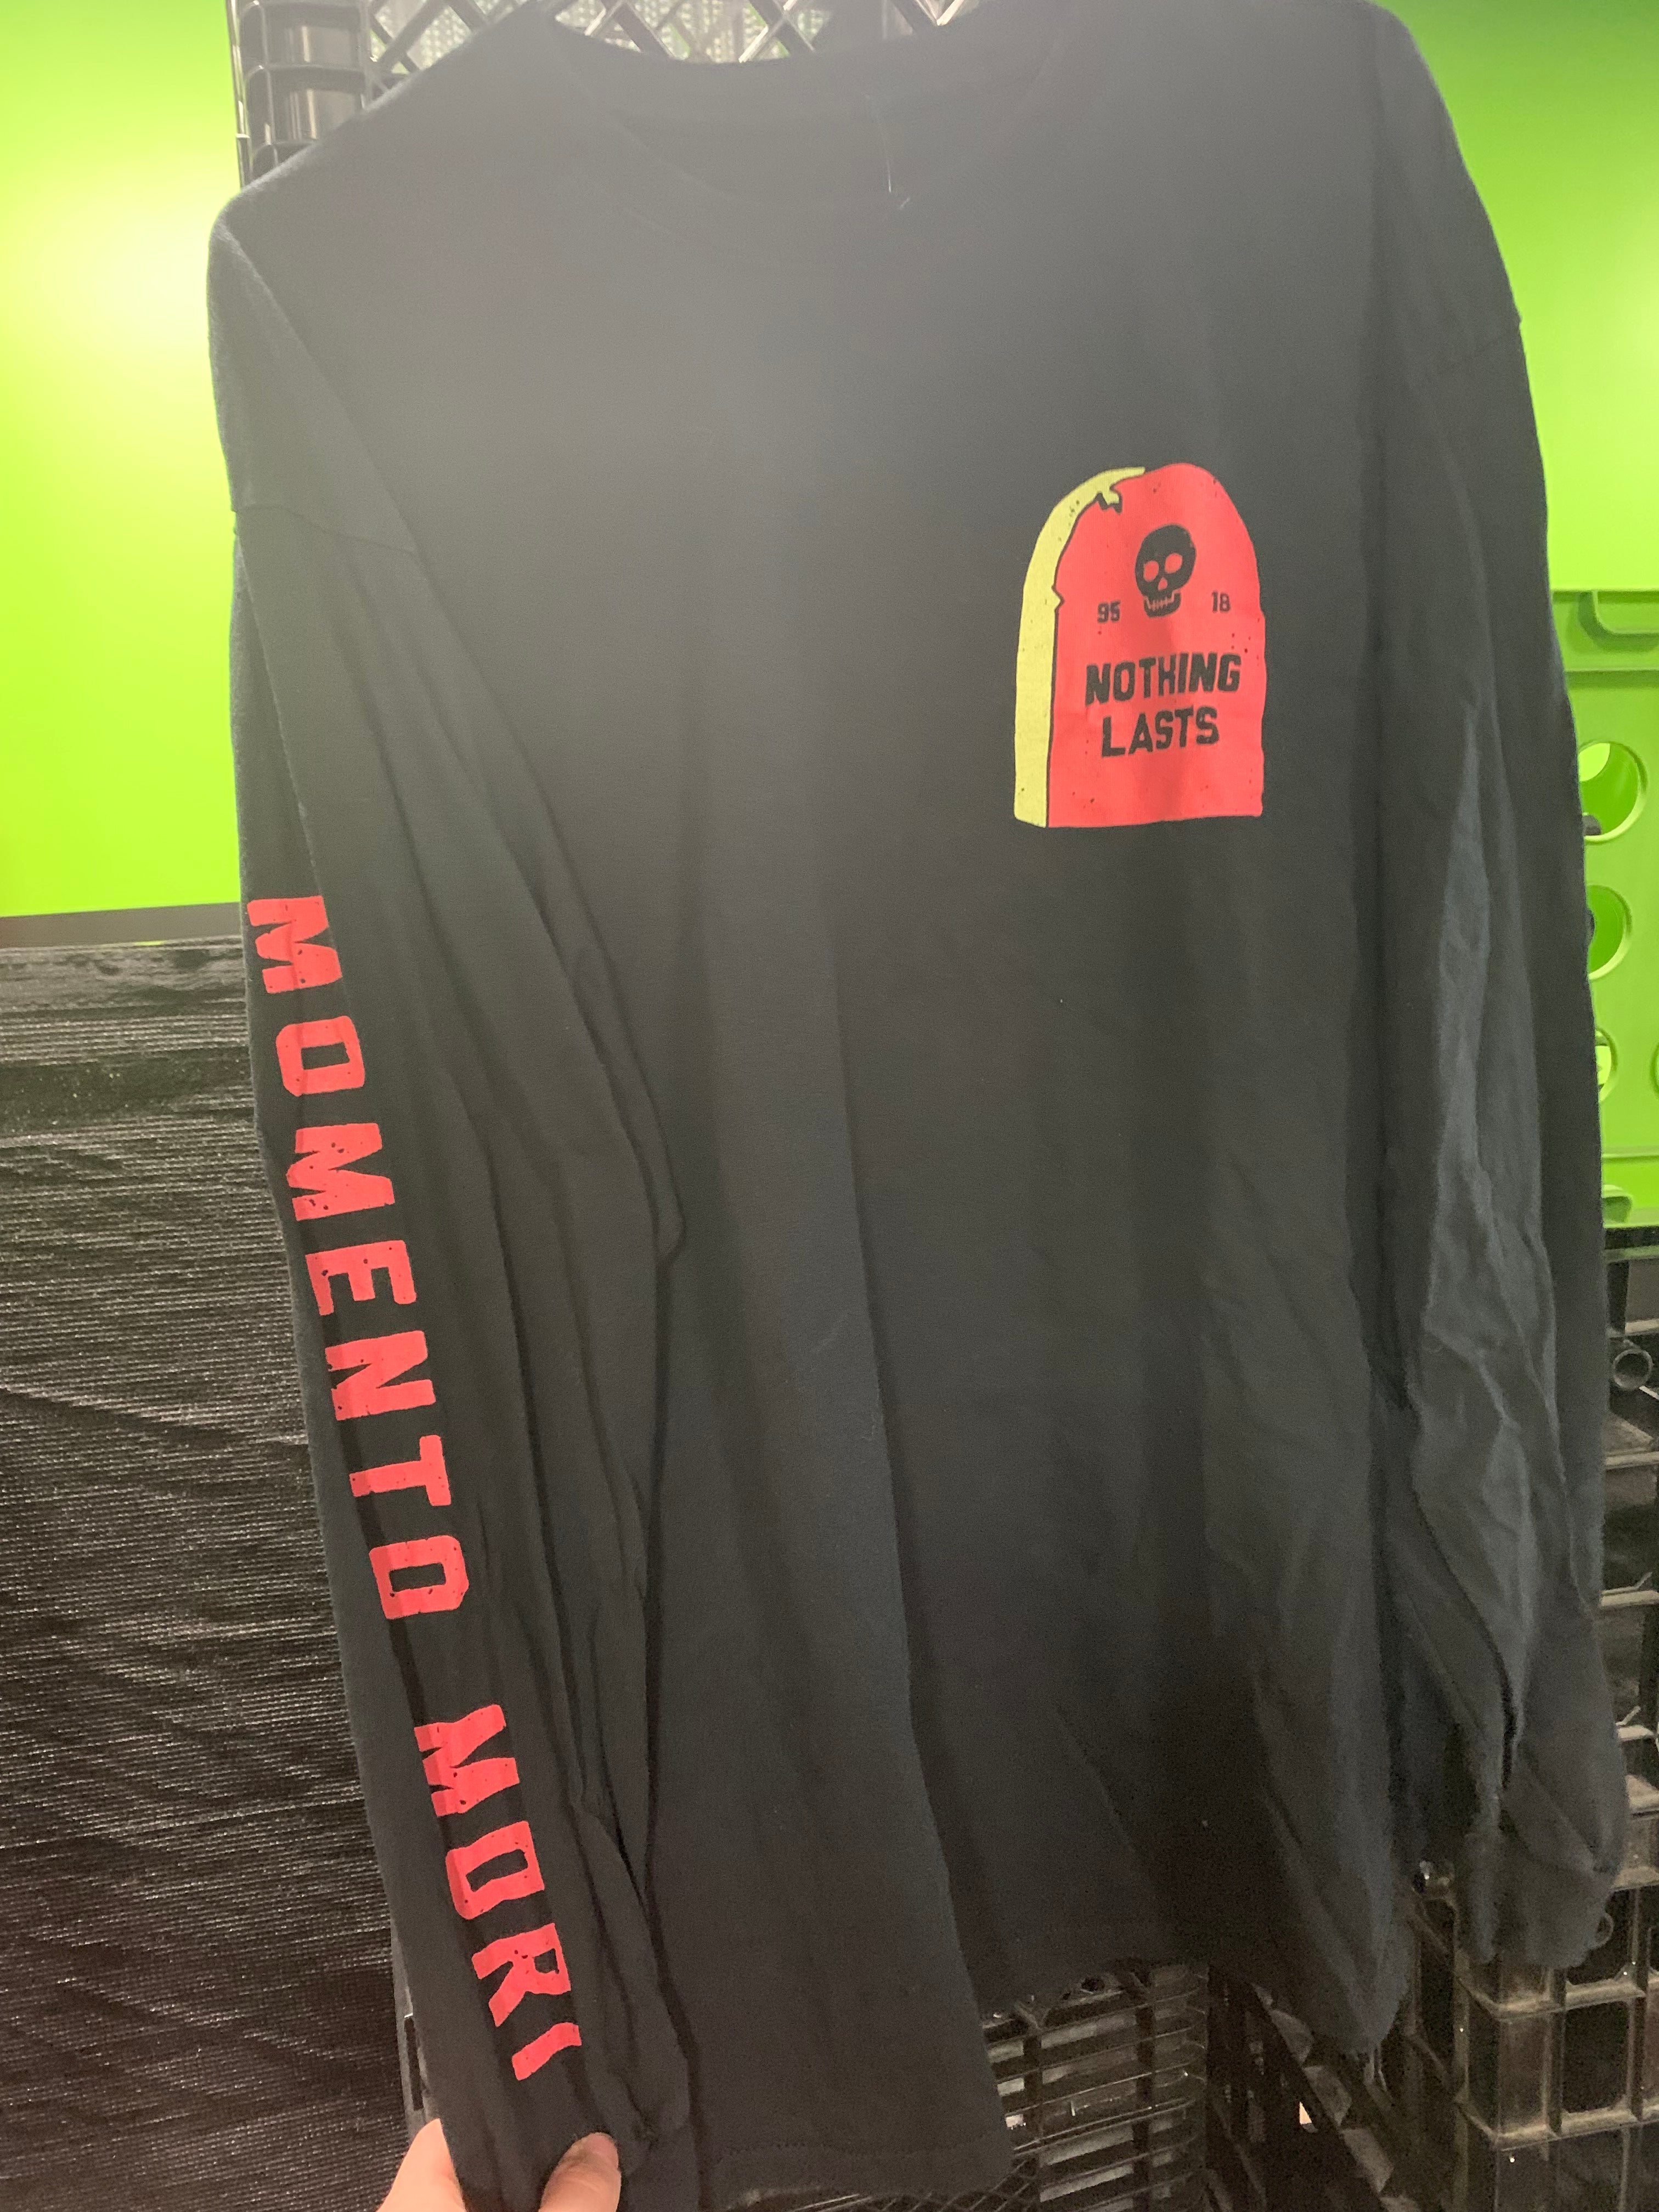 2018 Death Of Warped Tour Longsleeve Shirt, Black, XL